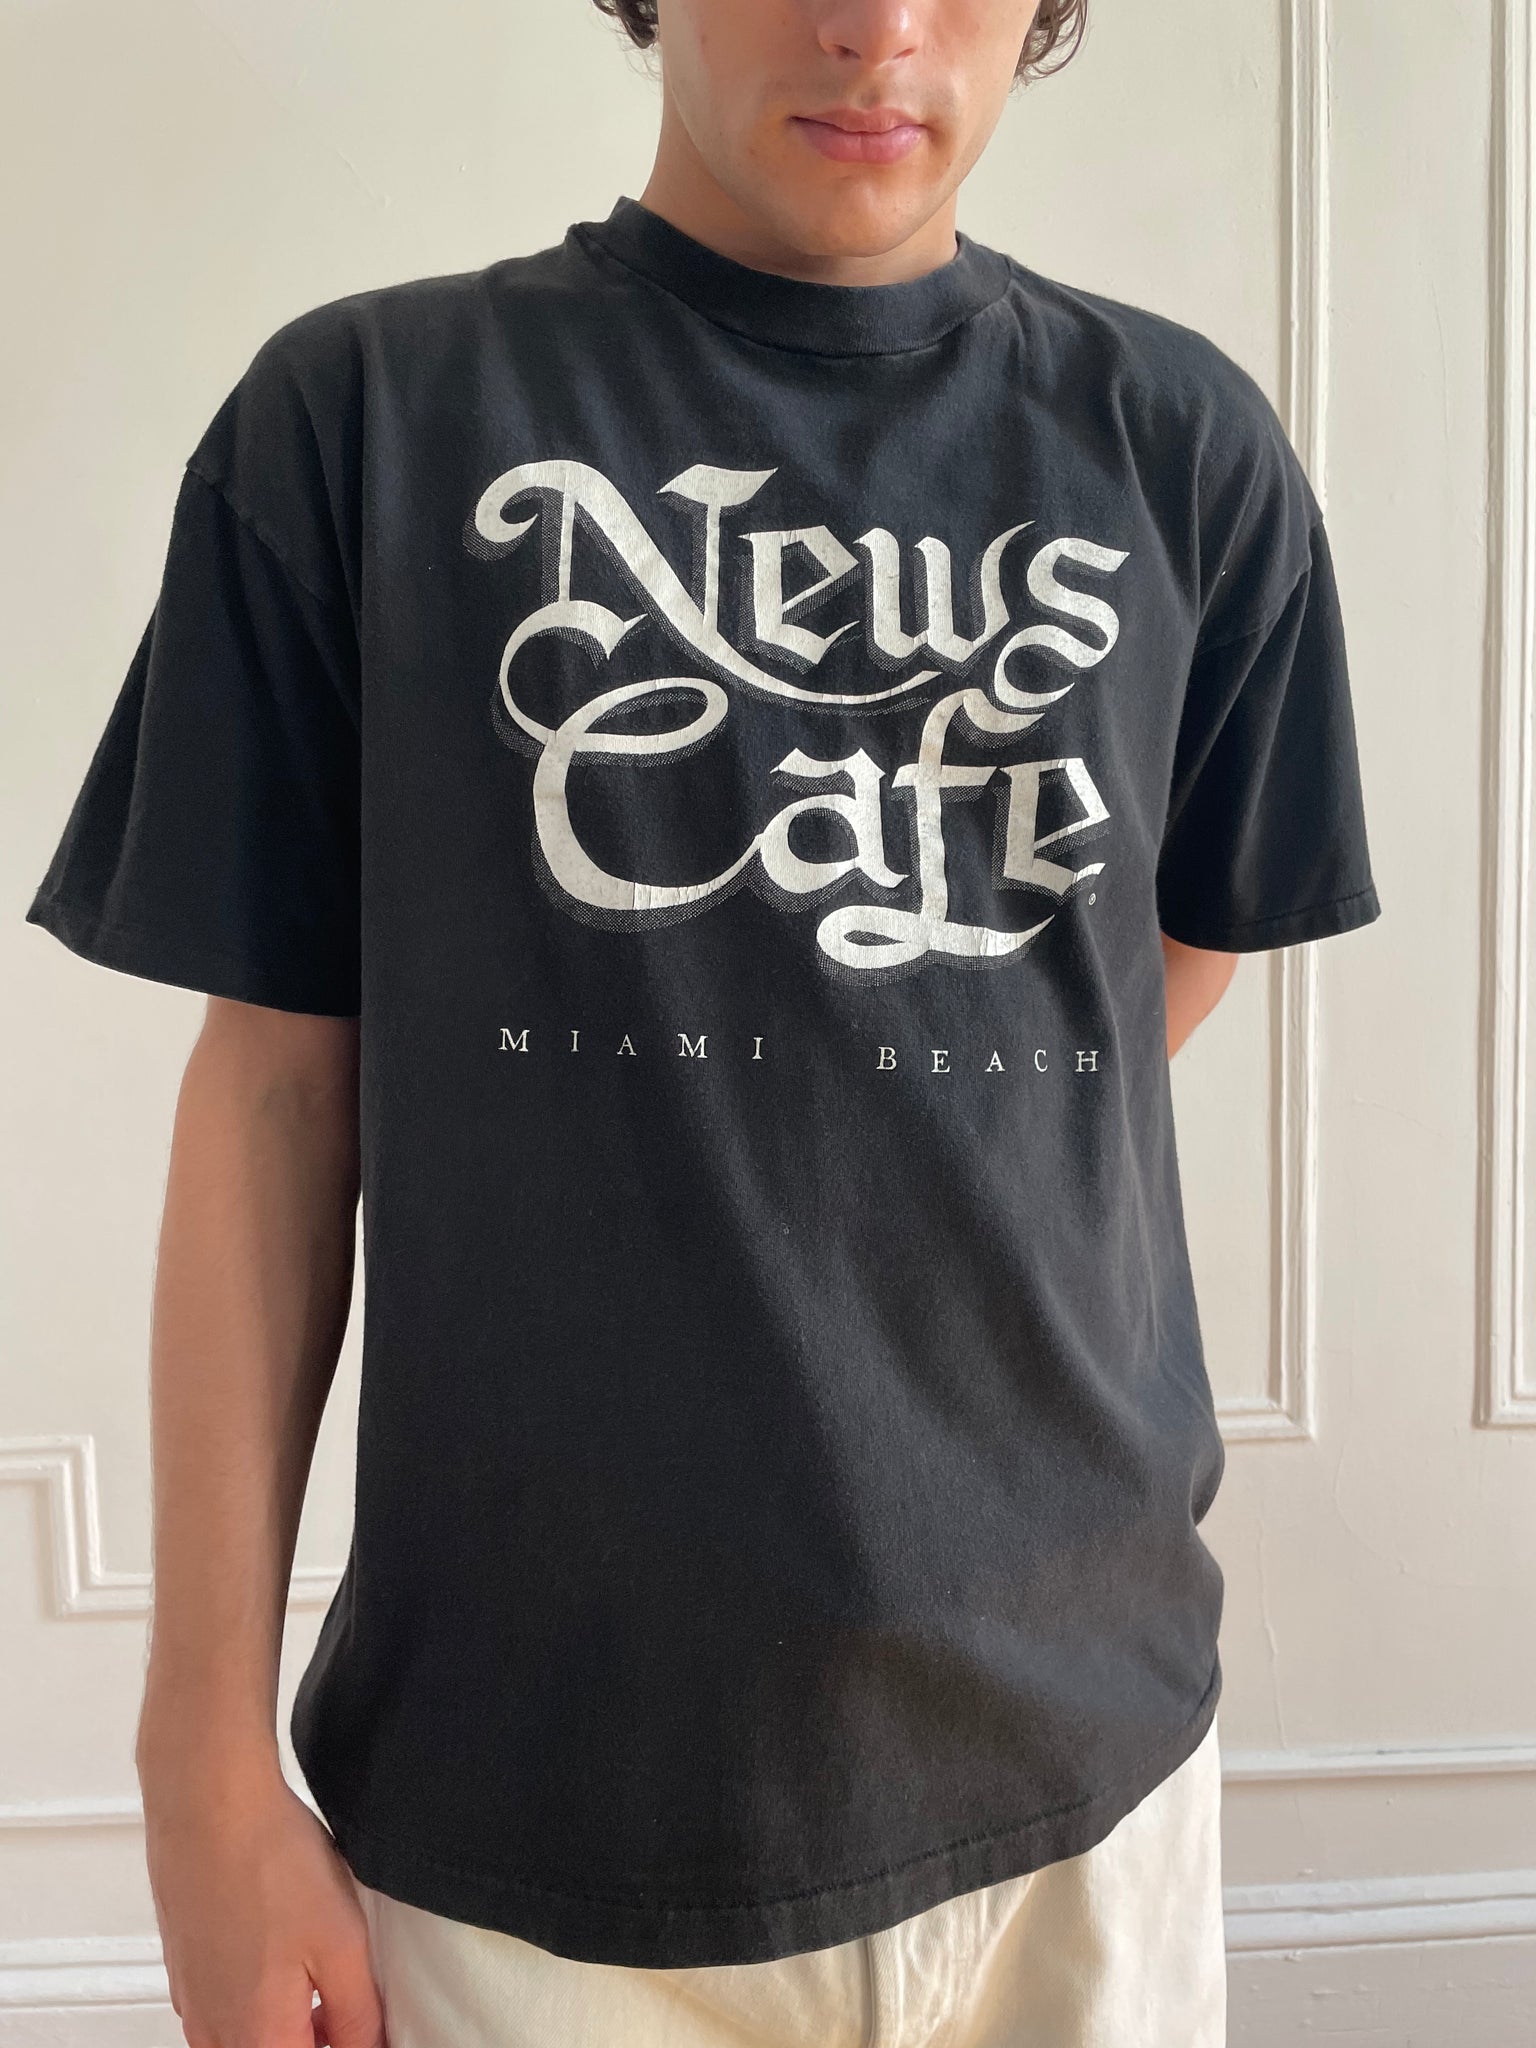 News Cafe Tee